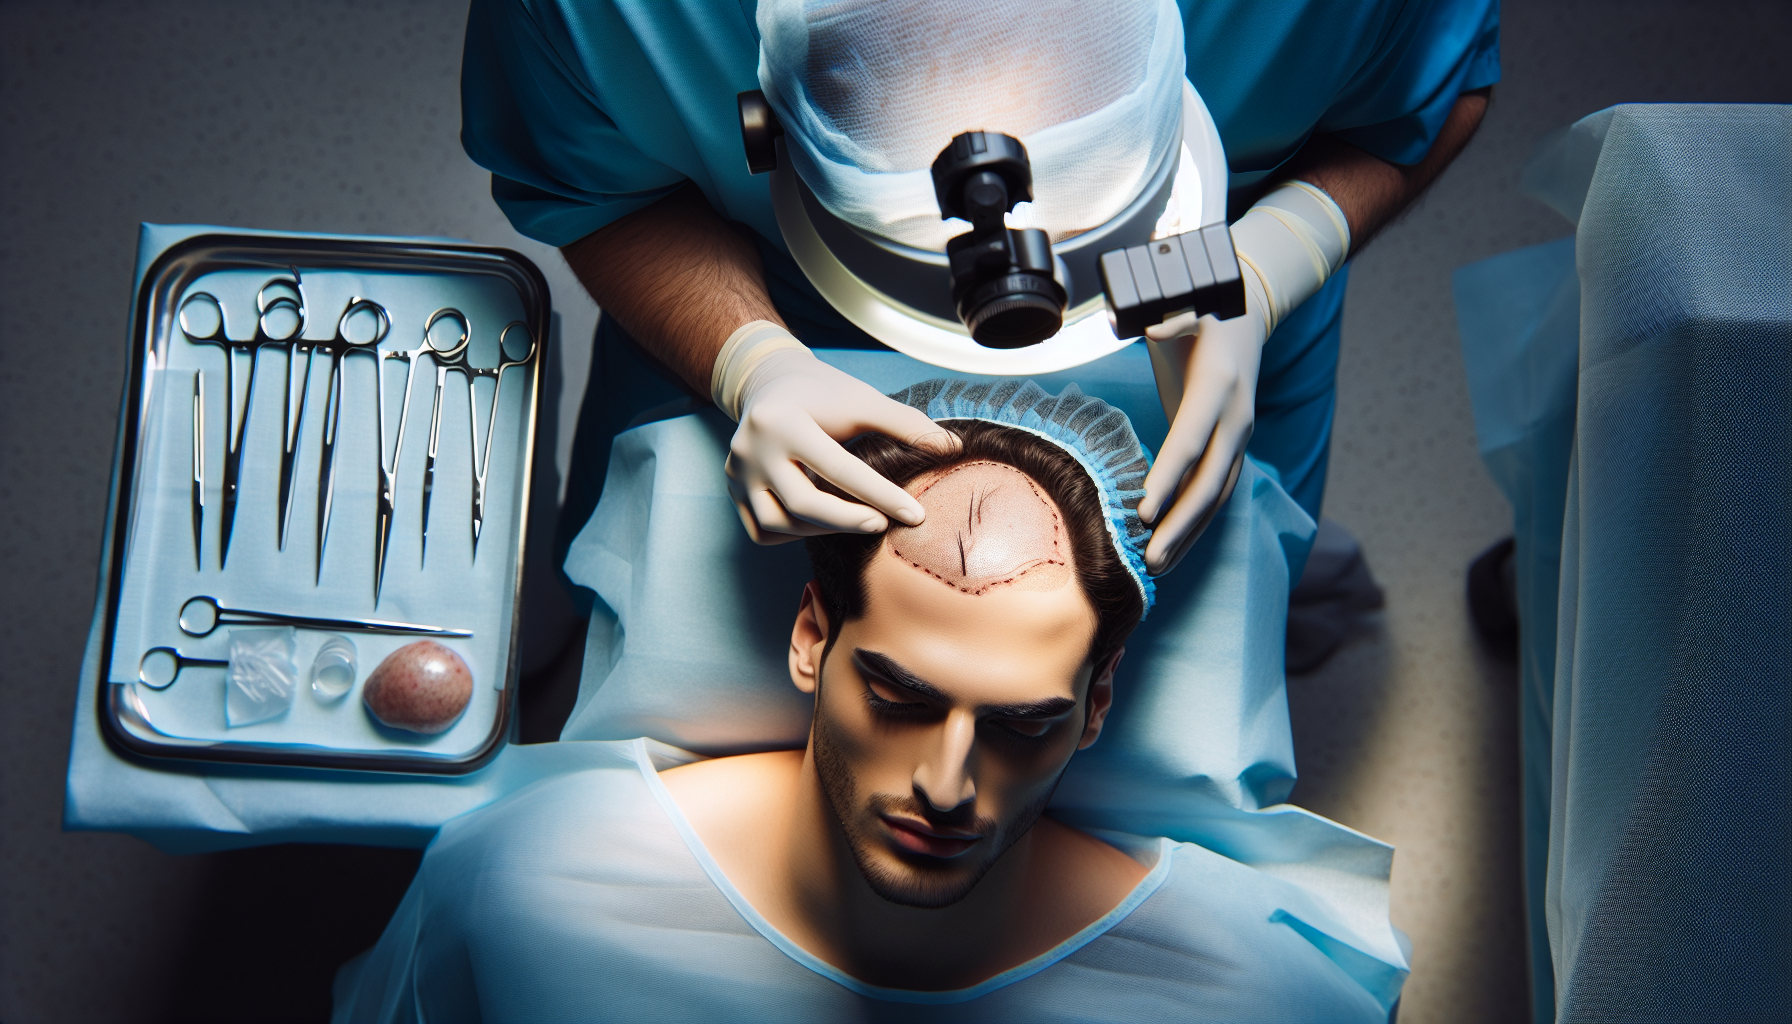 Hair transplant procedure illustration